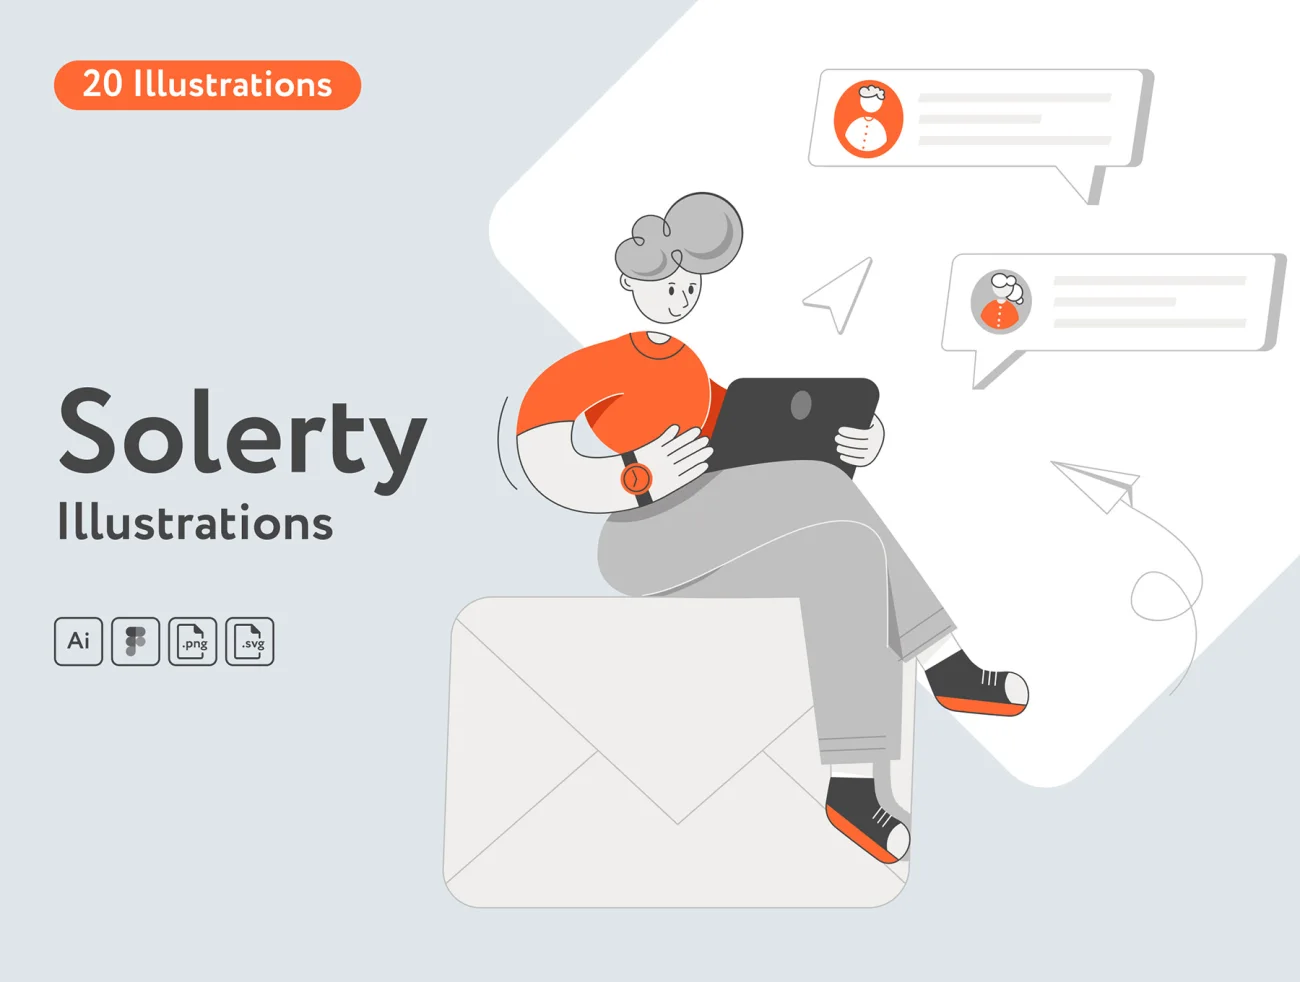 20款互联网营销插图合集素材下载 Solerty Marketing Illustrations .psd .ai .figma插图1